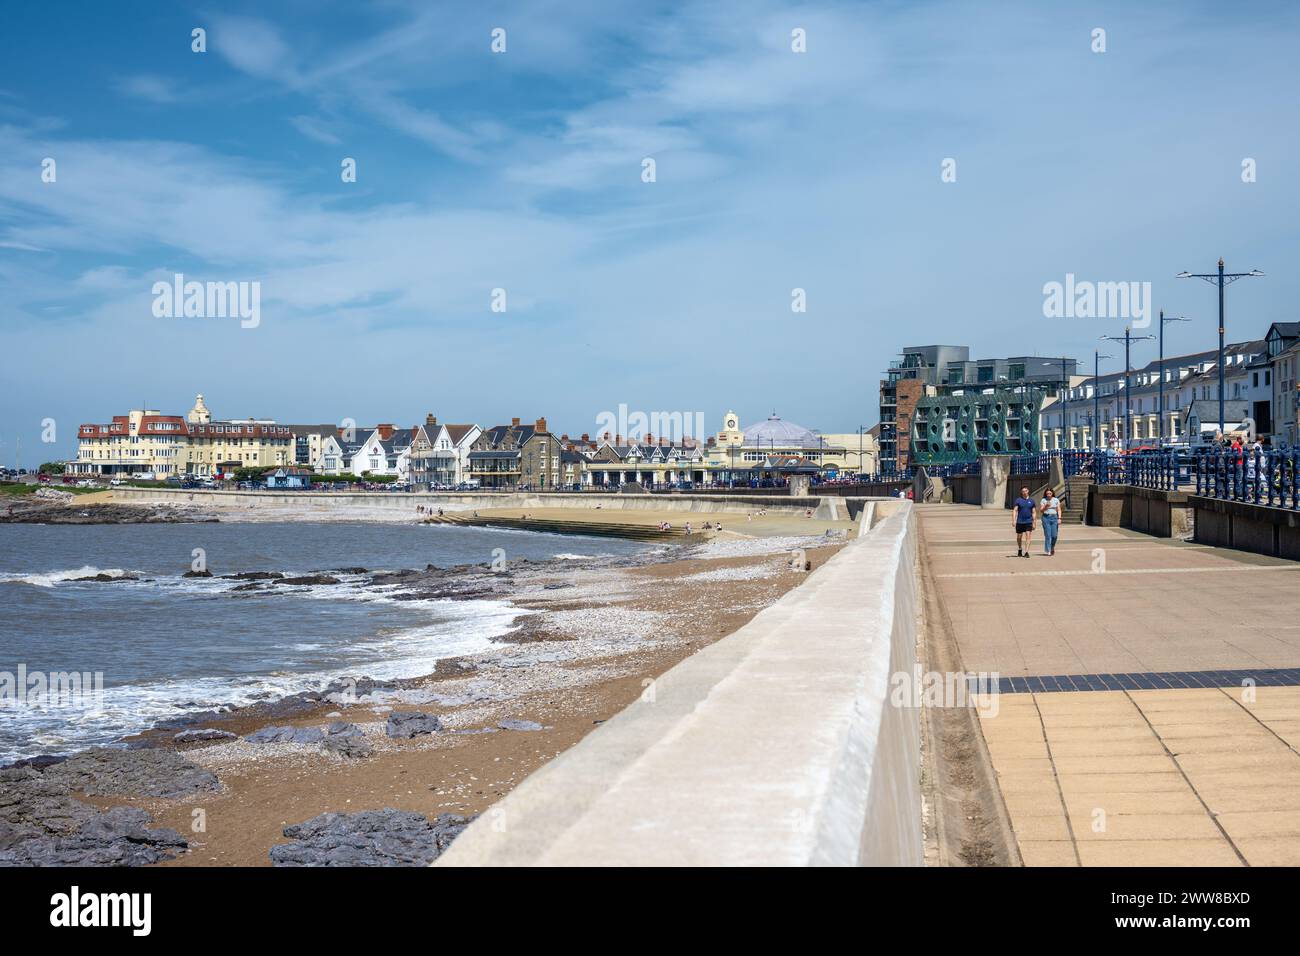 Town Beach, Esplanade, Porthcawl, Wales, UK Stock Photo